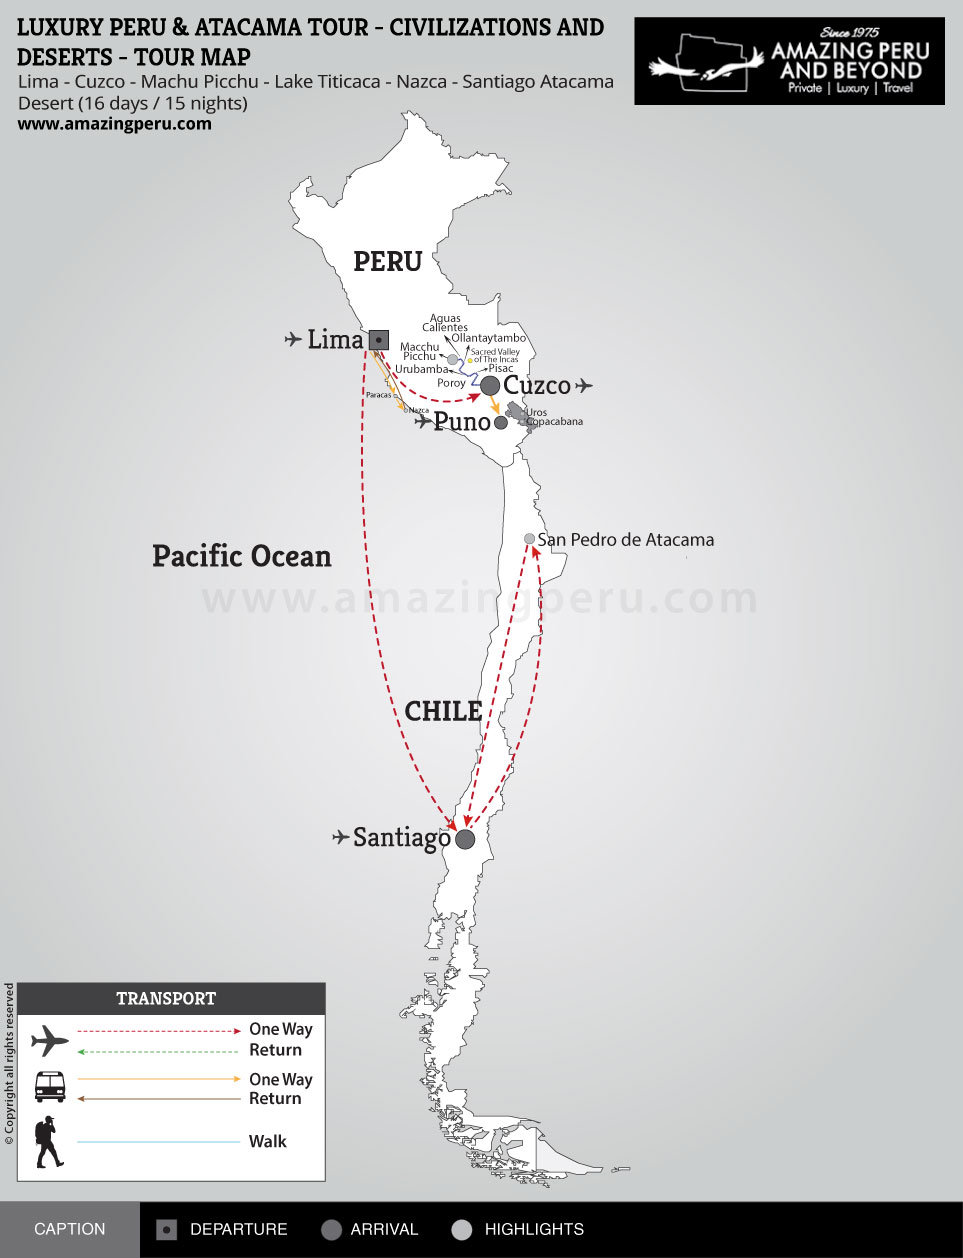 Luxury Peru & Atacama Tour - Civilizations and Deserts - 16 days / 15 nights.